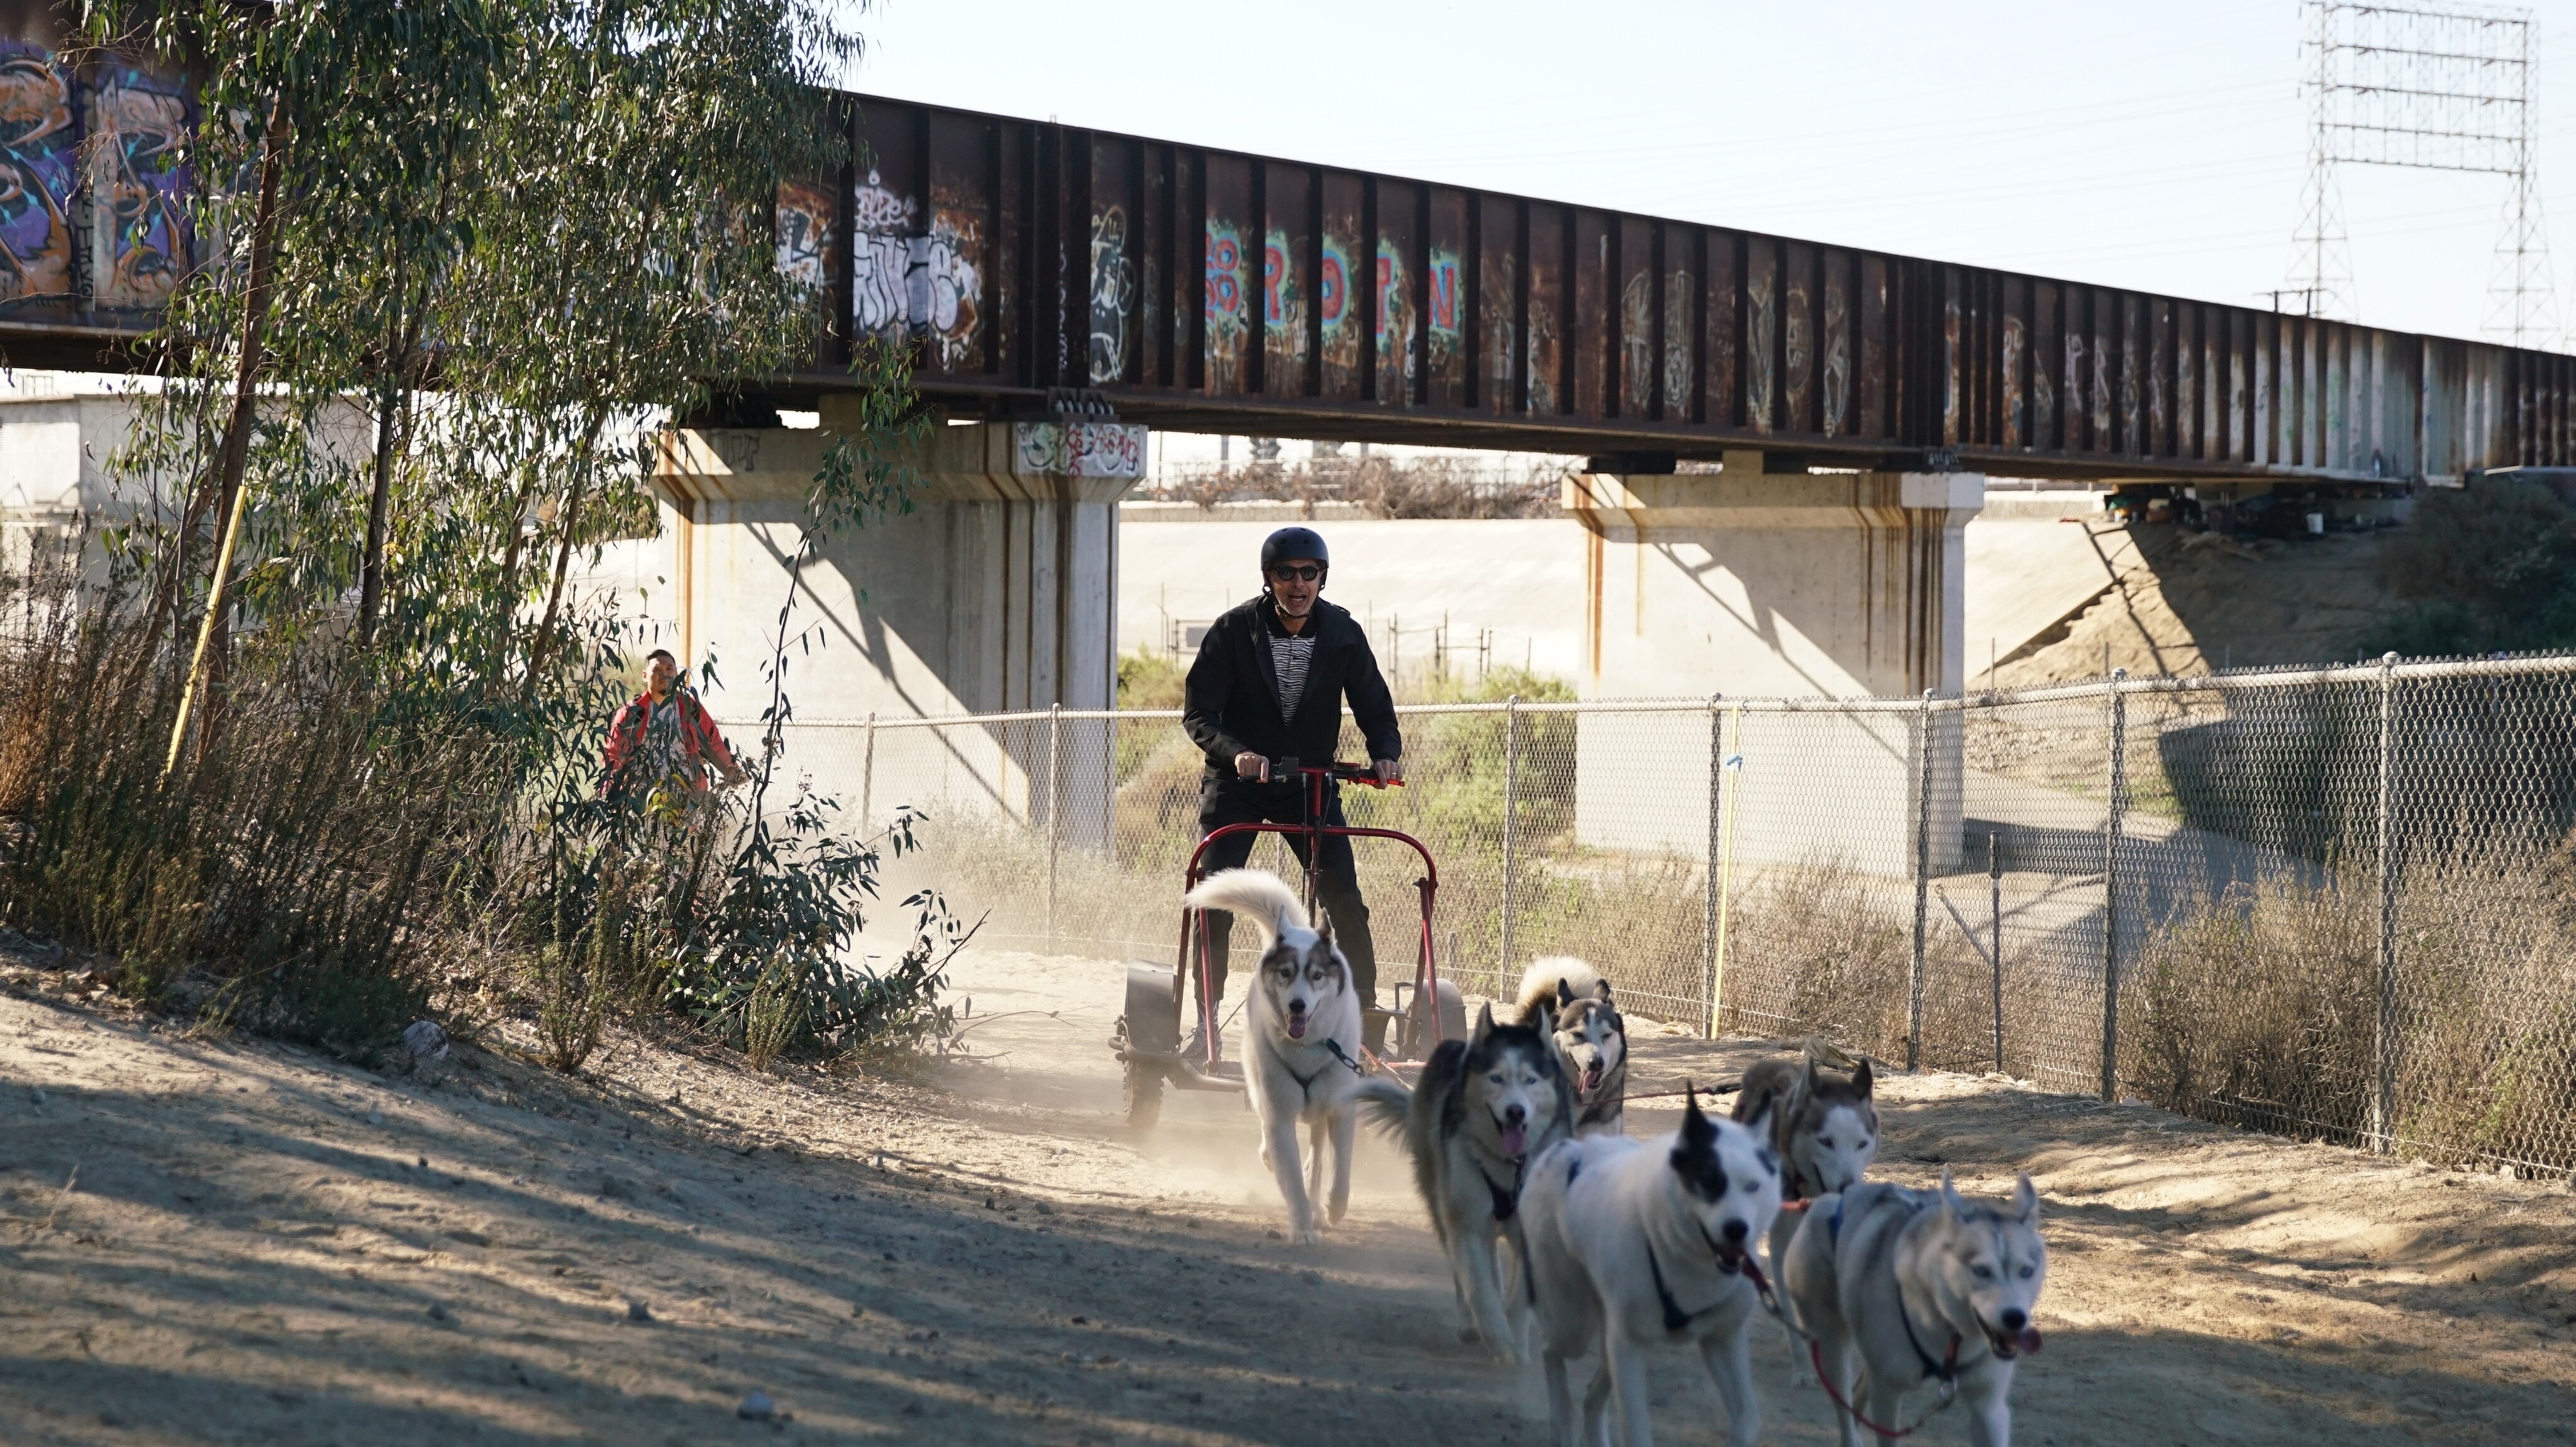 Orange County, CA - Jeff Goldblum urban mushing with a team of huskies. (Credit: National Geographic)